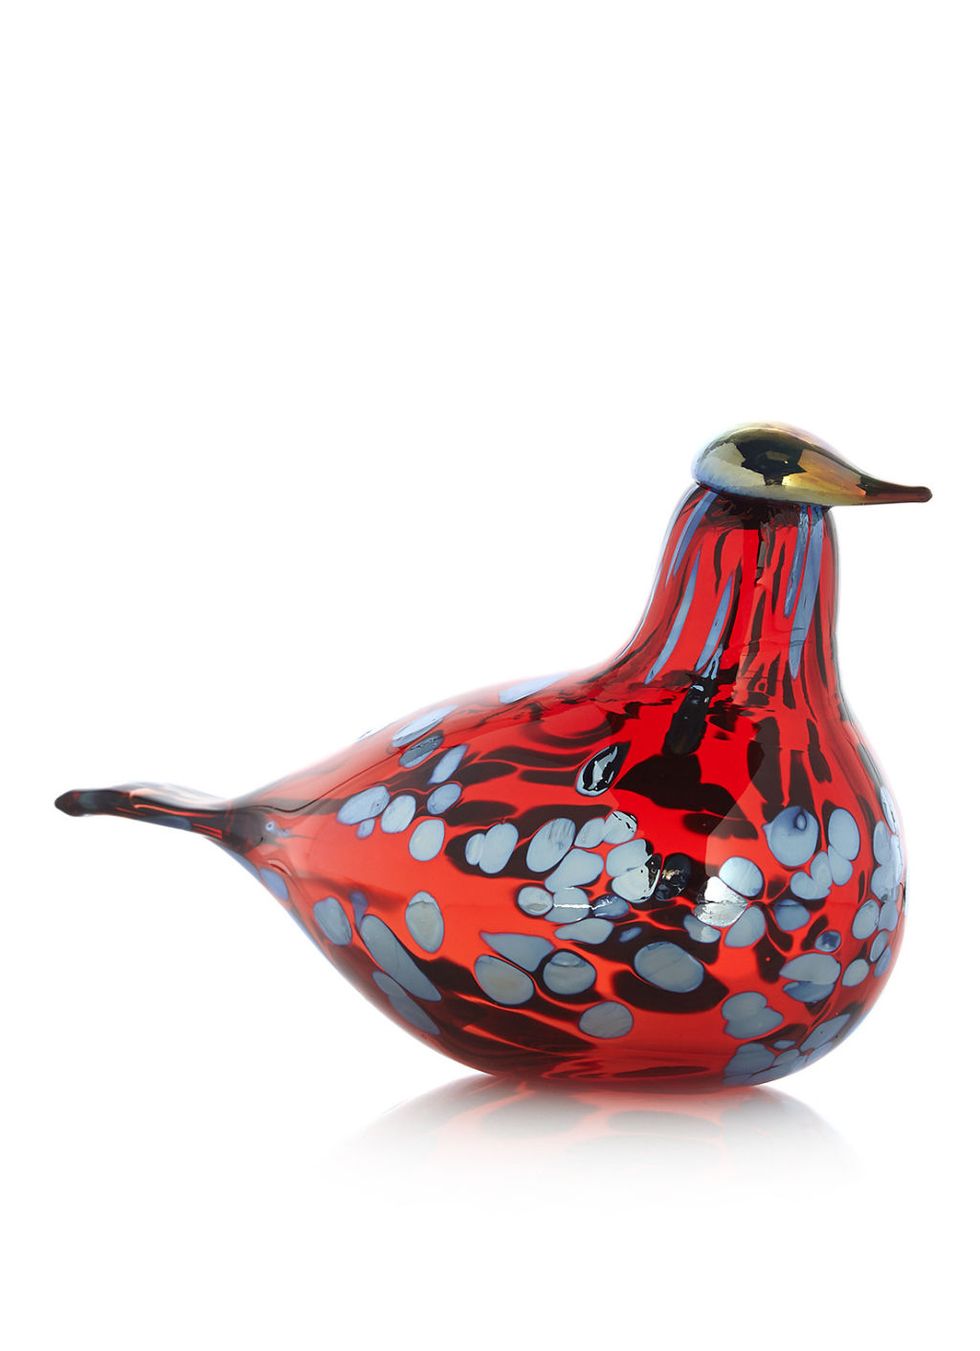 Bird, Beak, Red, Art, Serveware, Maroon, Ceramic, Creative arts, Pottery, Illustration, 